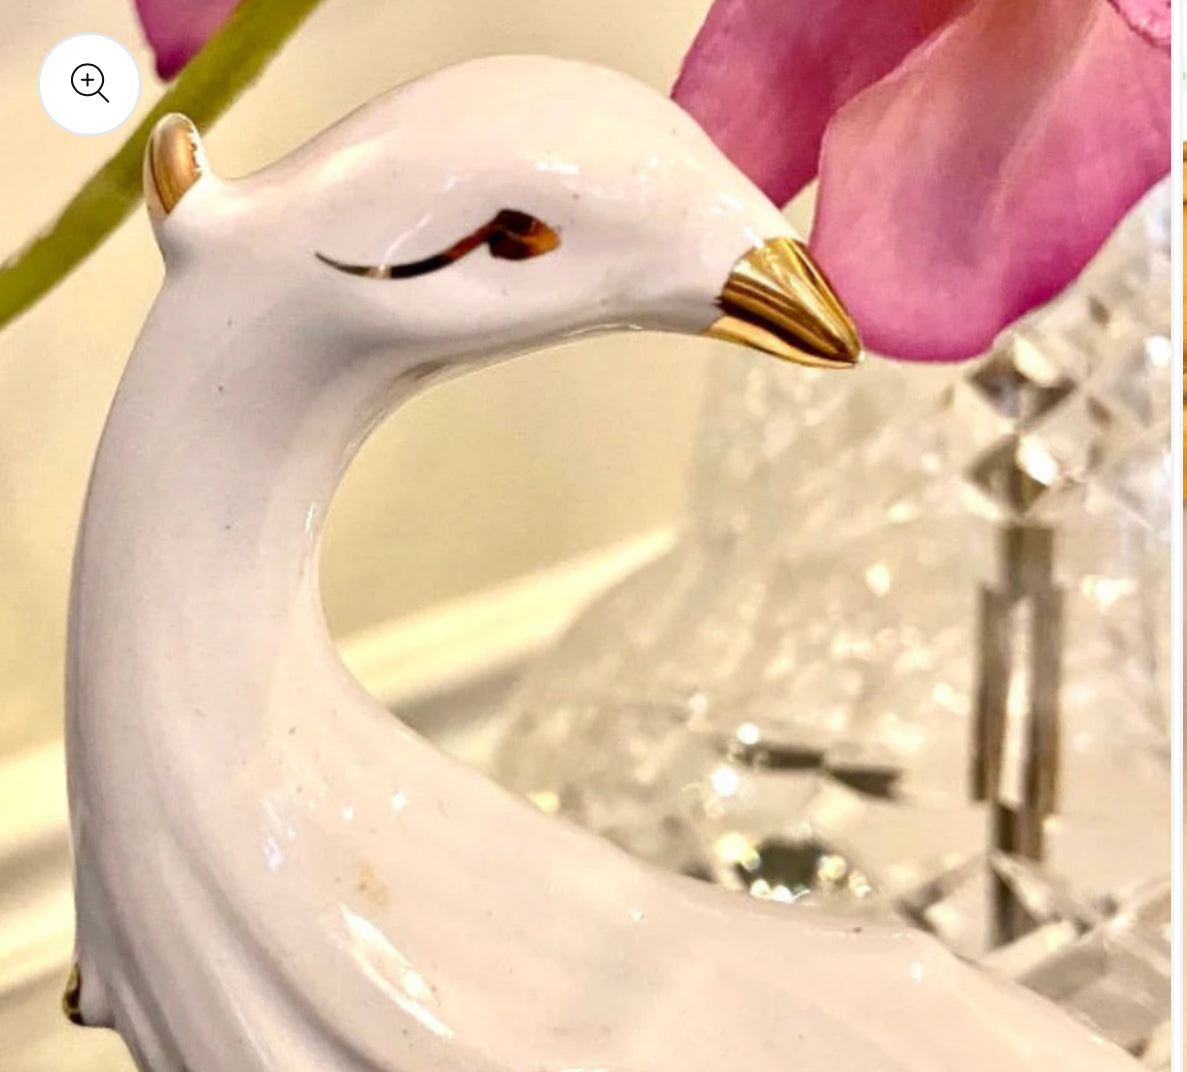 Pristine porcelain vintage tall white statuesque bird.